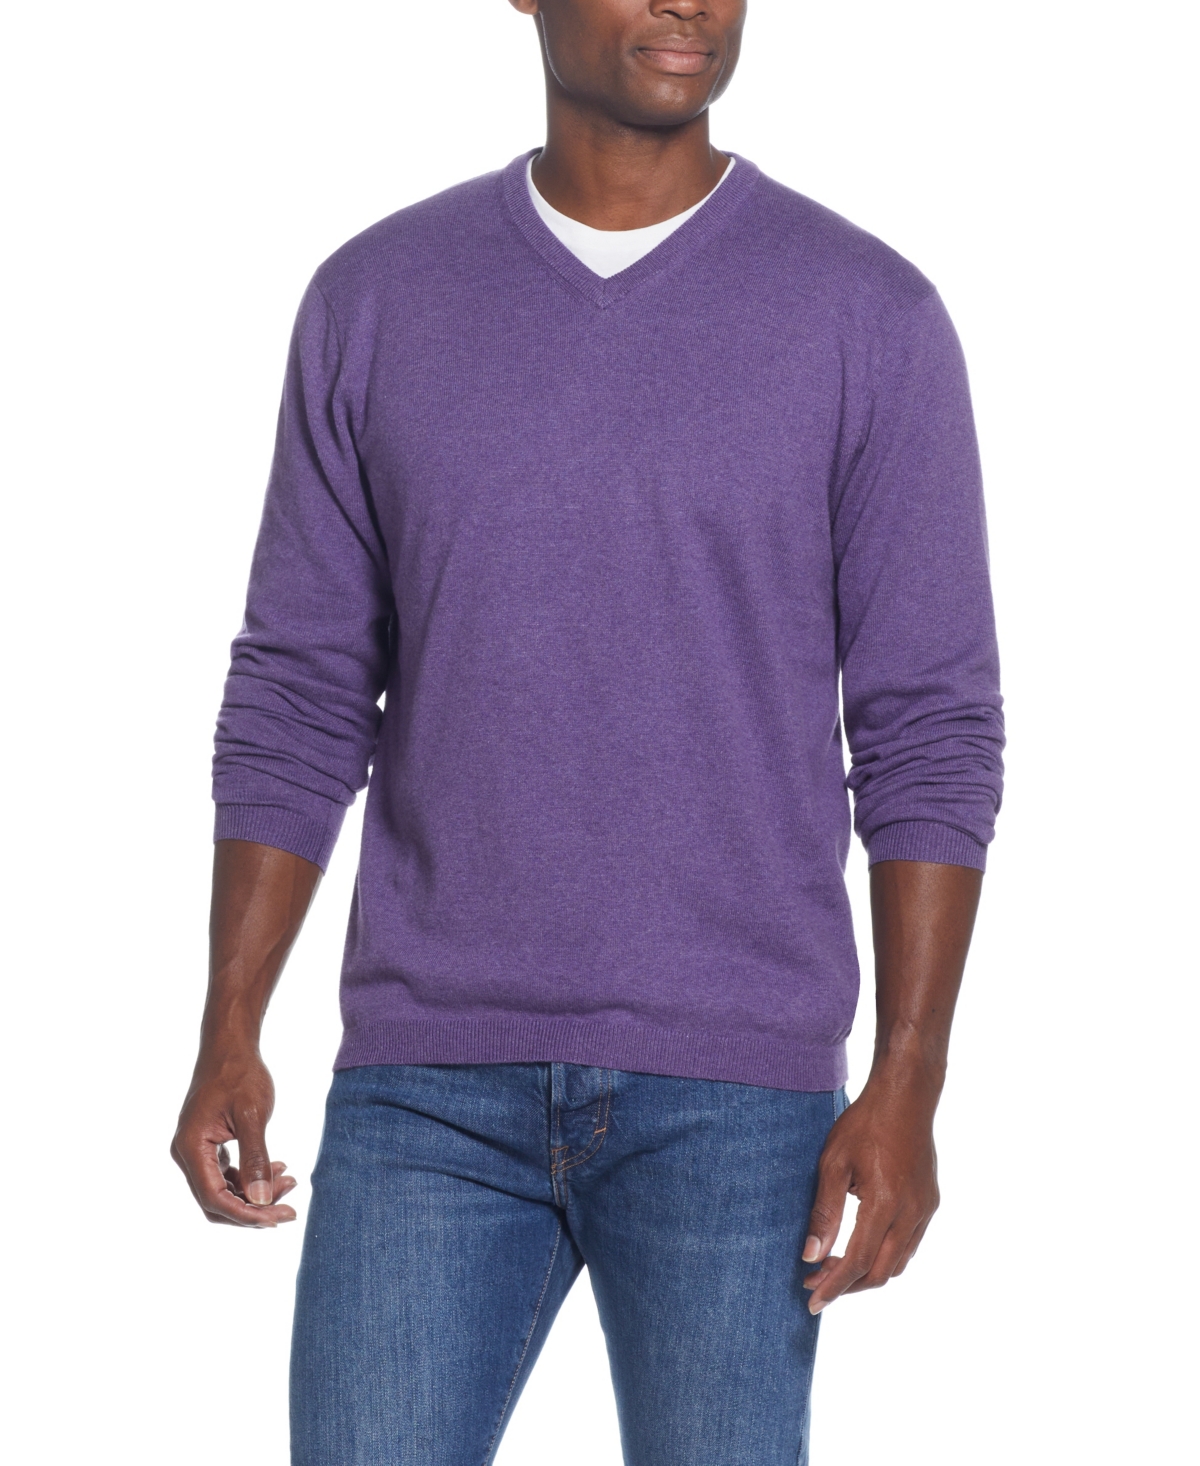 Men's Cotton Cashmere V-Neck Sweater - Amethyst